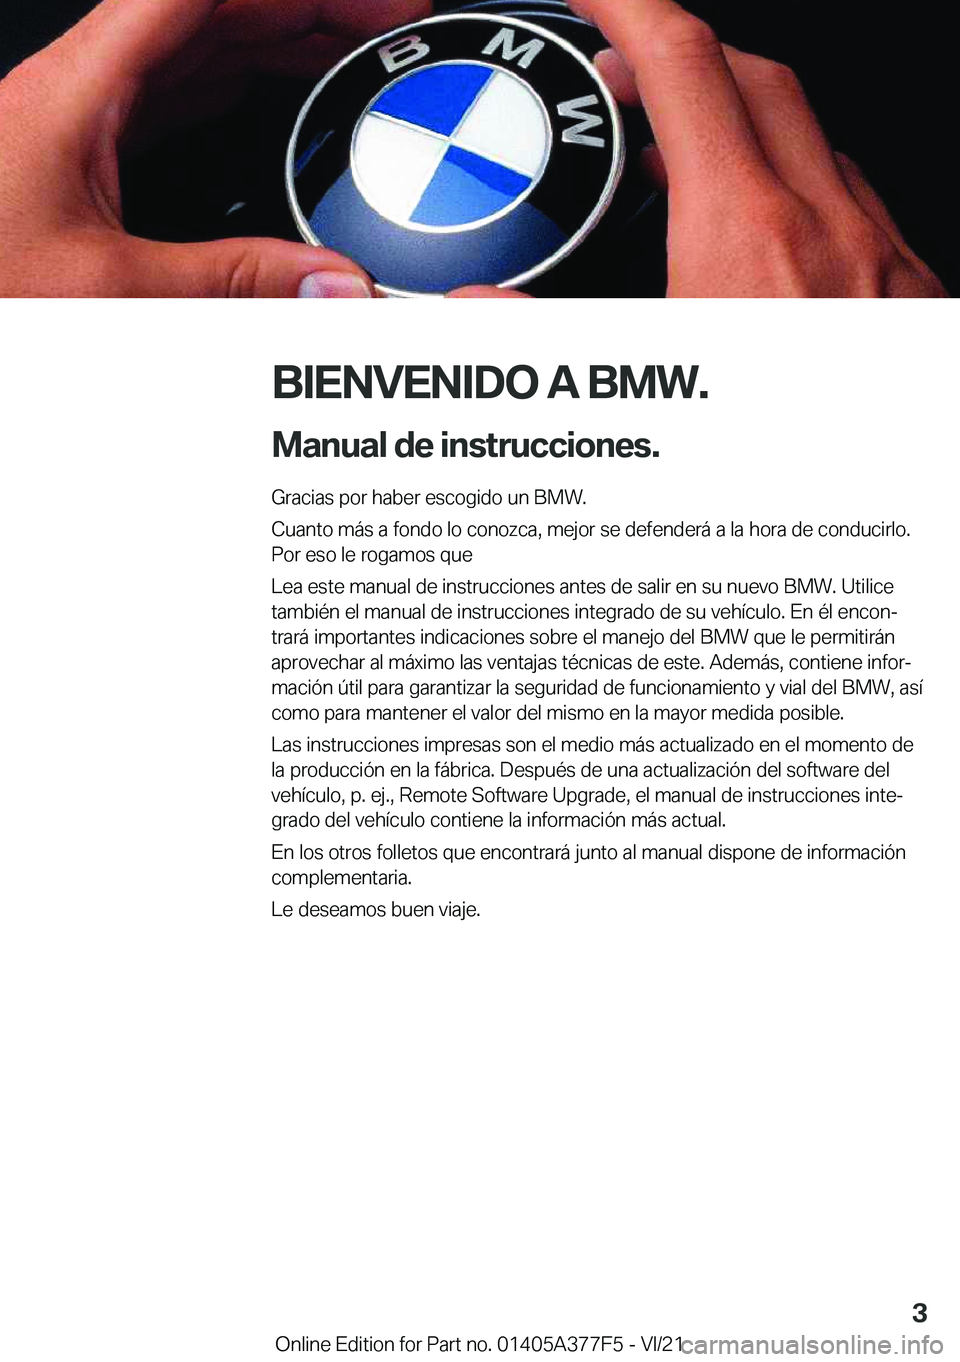 BMW X3 M 2022  Manuales de Empleo (in Spanish) �B�I�E�N�V�E�N�I�D�O��A��B�M�W�.
�M�a�n�u�a�l��d�e��i�n�s�t�r�u�c�c�i�o�n�e�s�. �G�r�a�c�i�a�s��p�o�r��h�a�b�e�r��e�s�c�o�g�i�d�o��u�n��B�M�W�.
�C�u�a�n�t�o��m�